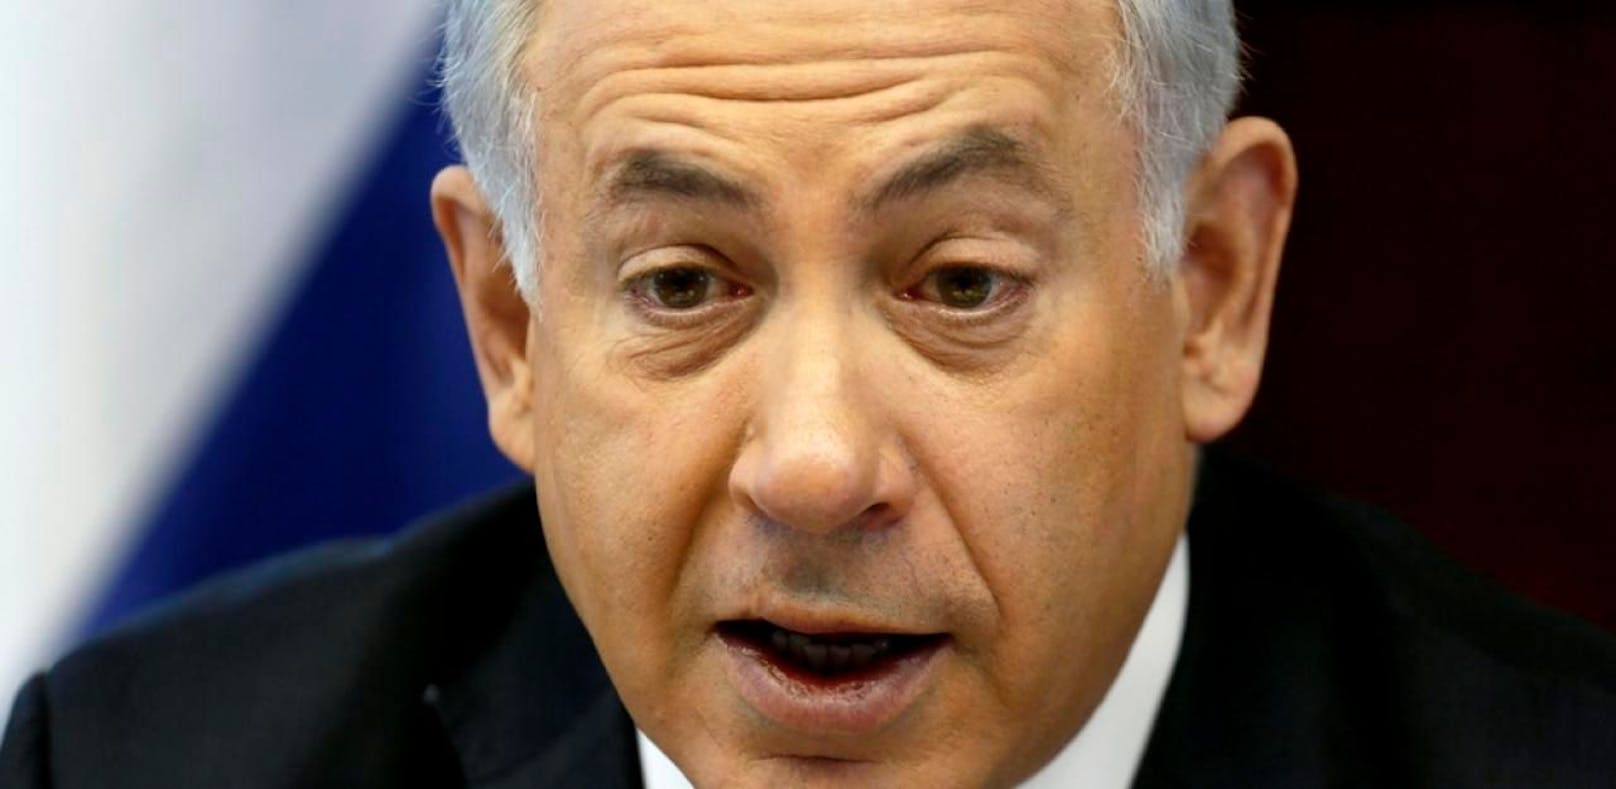 Israels Premier Netanyahu geht in Quarantäne